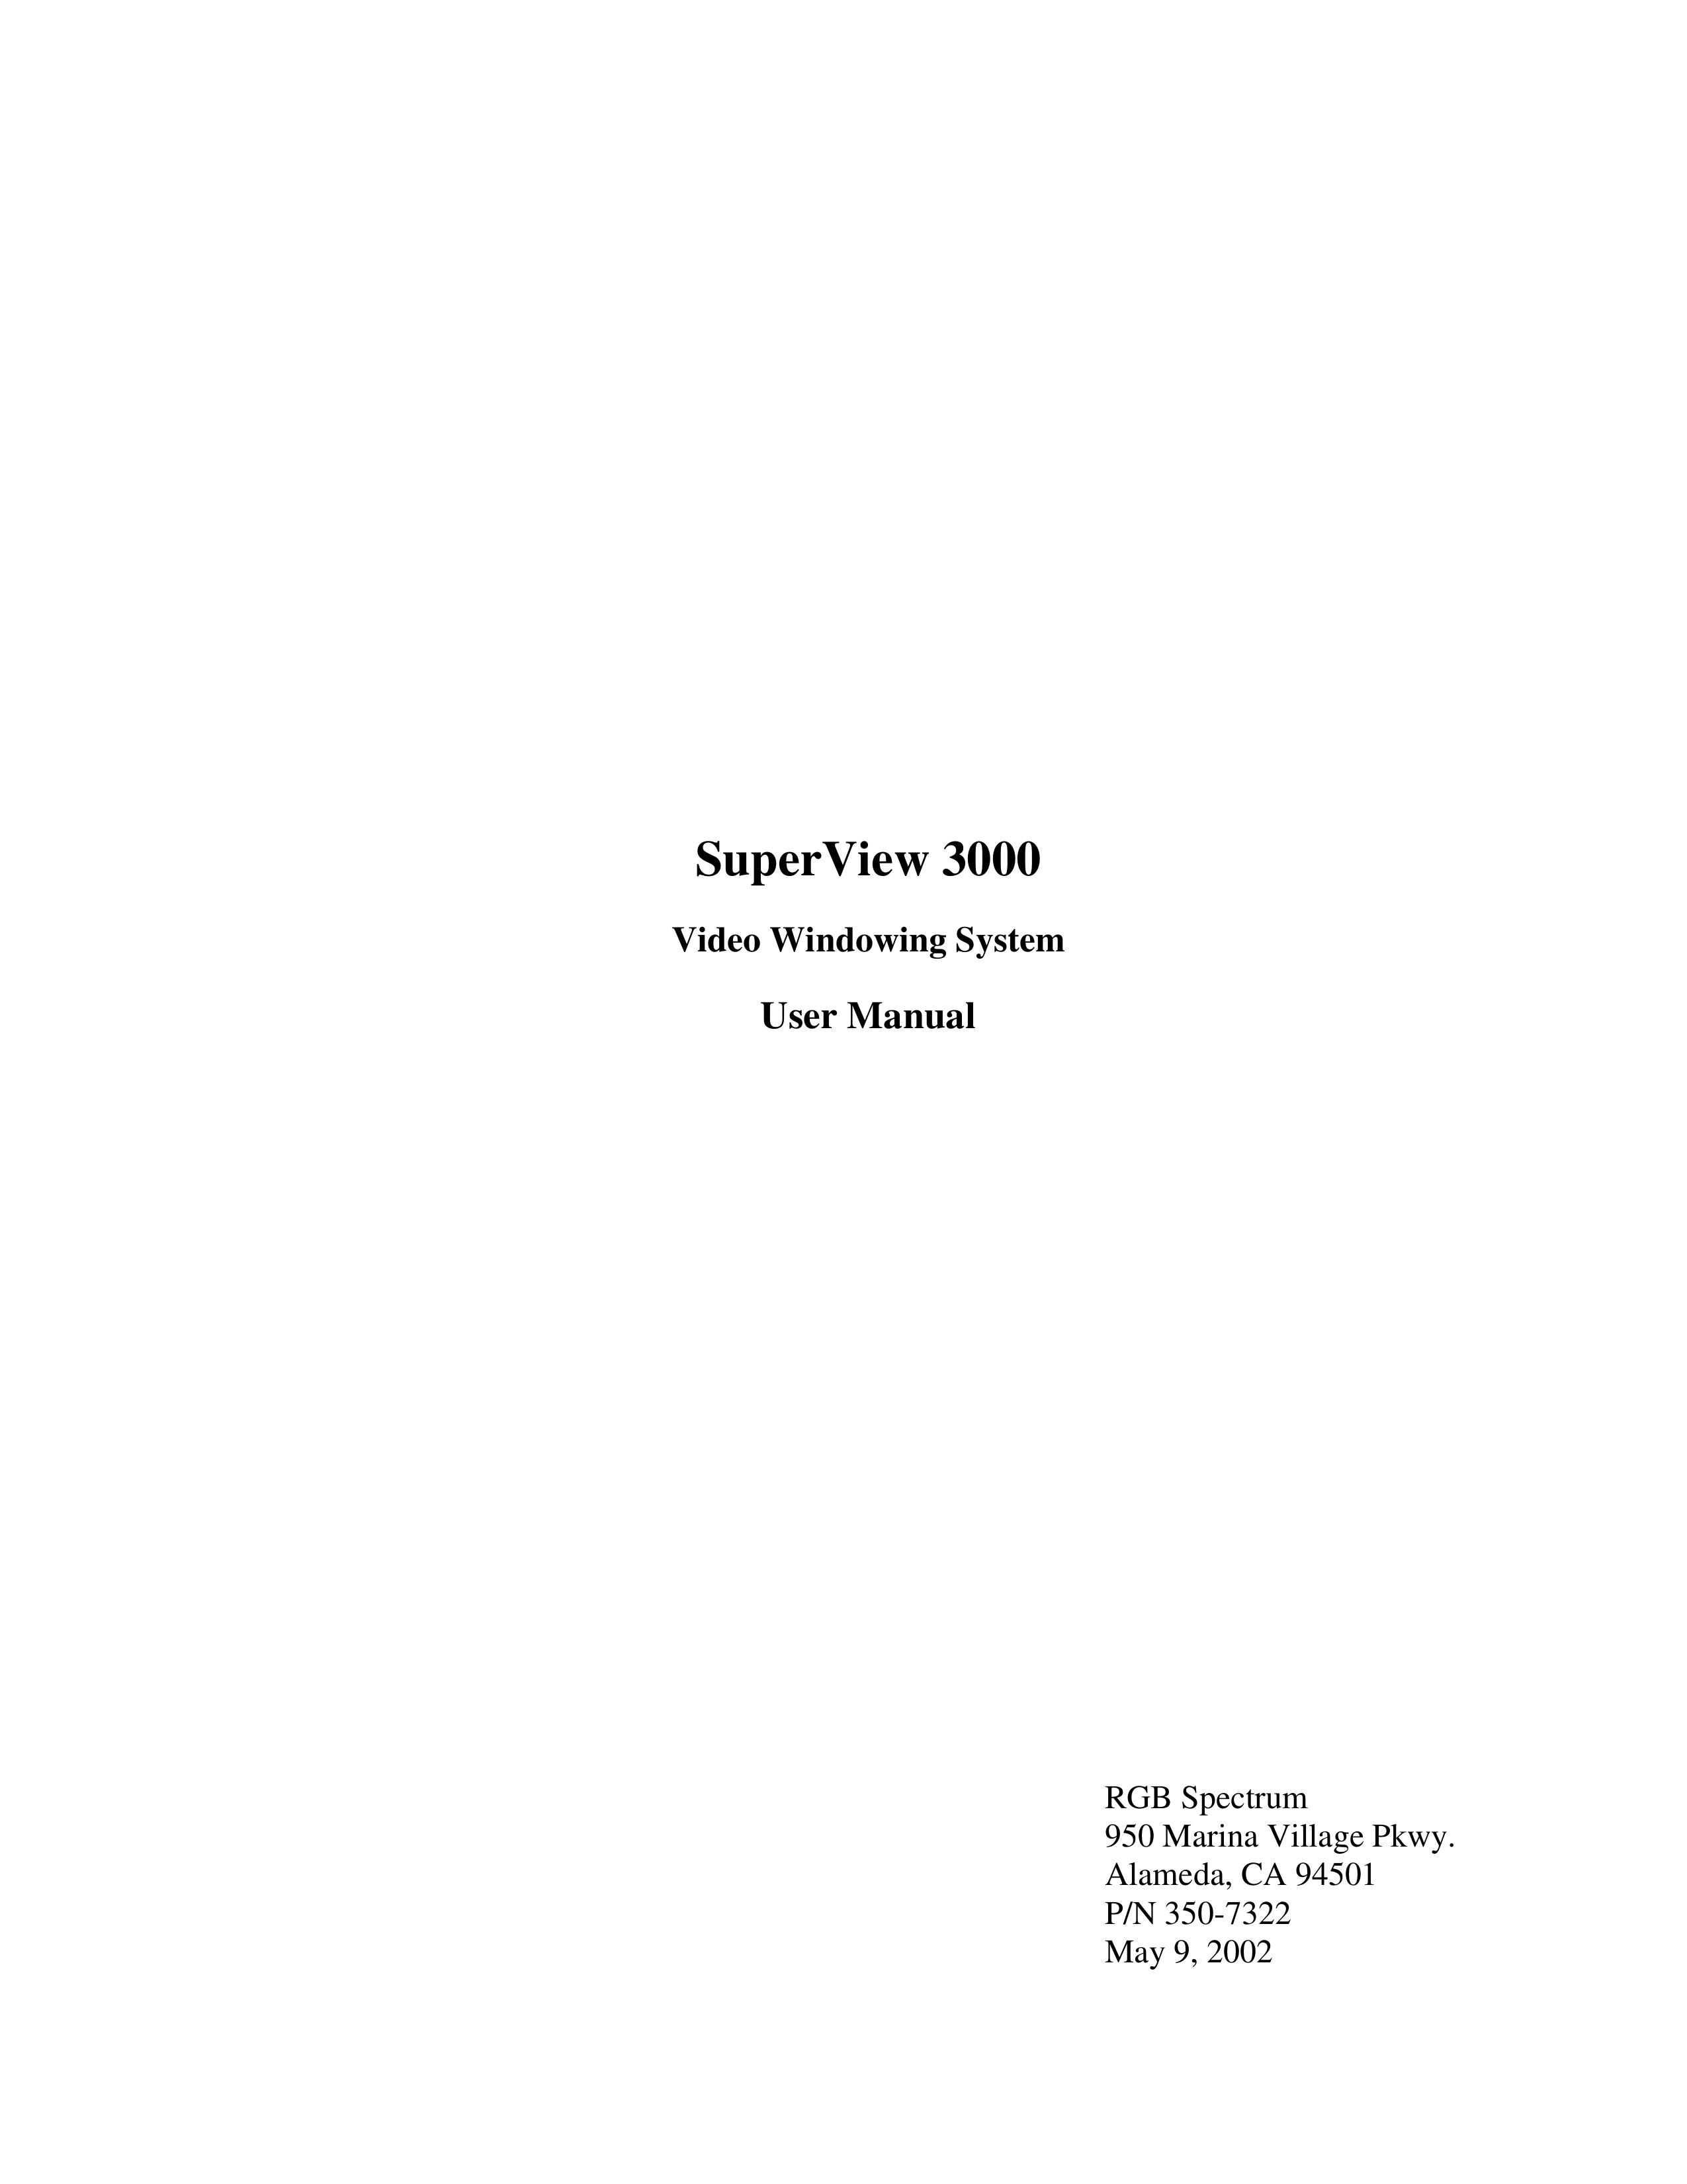 RGB Spectrum SuperView 3000 Camcorder User Manual